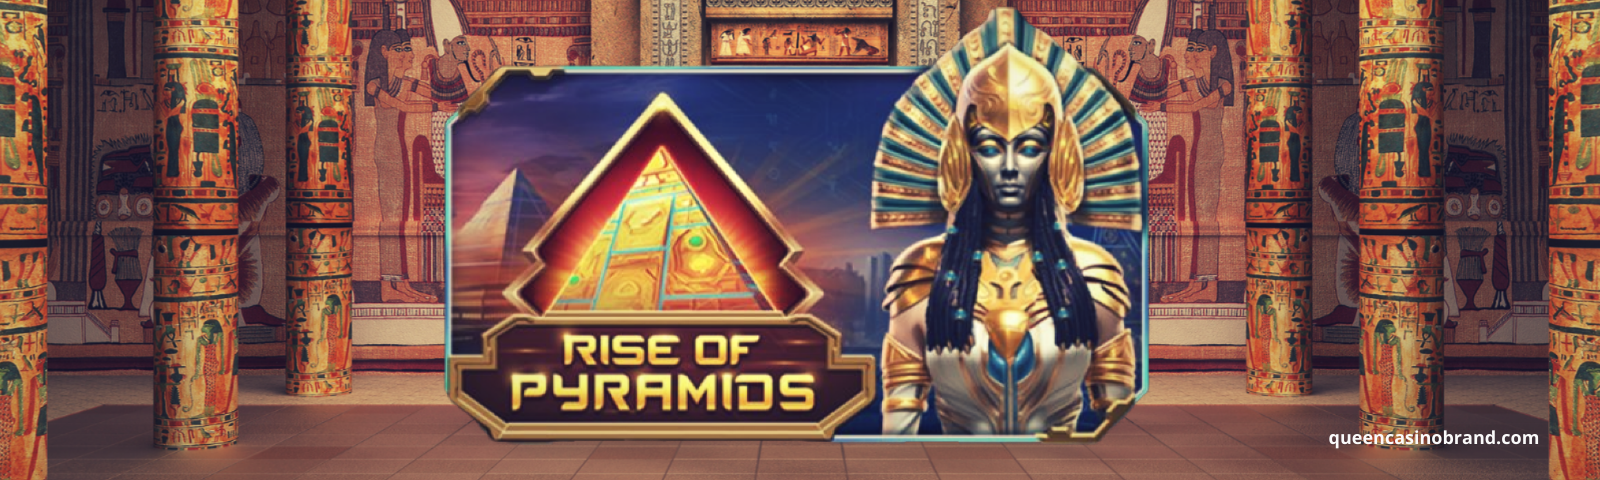 Rise of Pyramids Online Slot | Queen Casino Brand